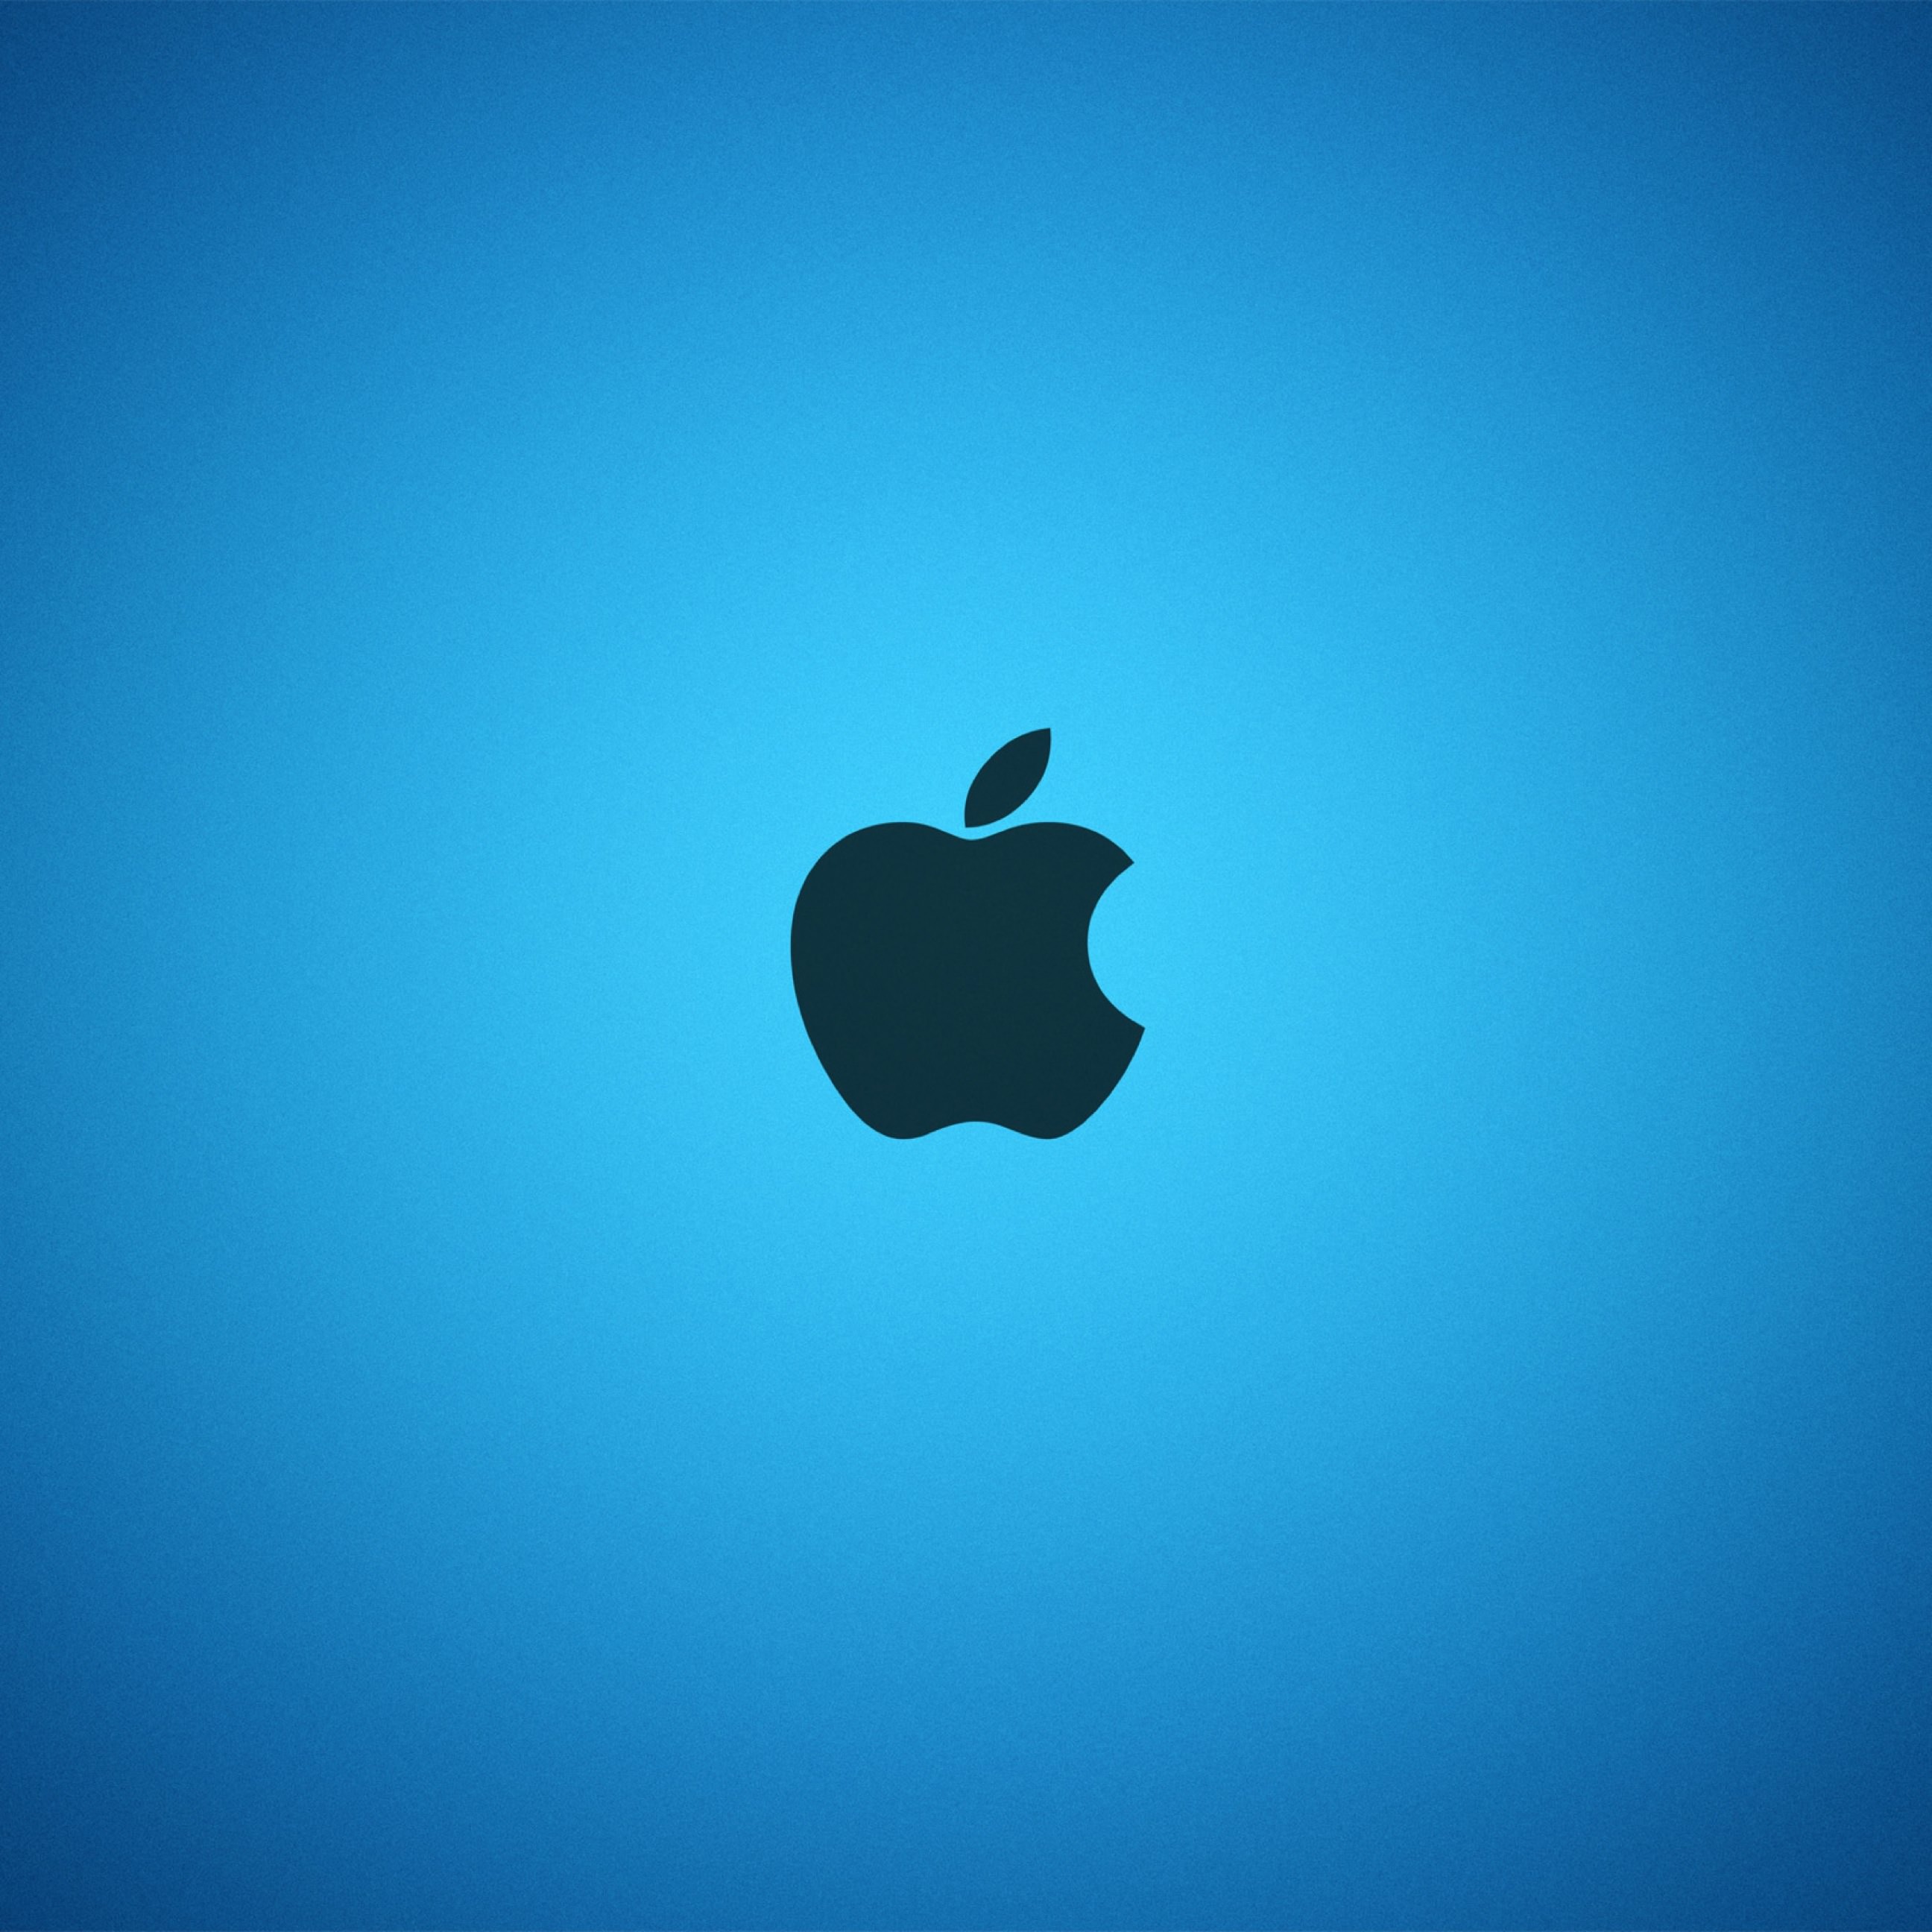 Apple logo blue | wallpaper.sc iPhone6sPlus